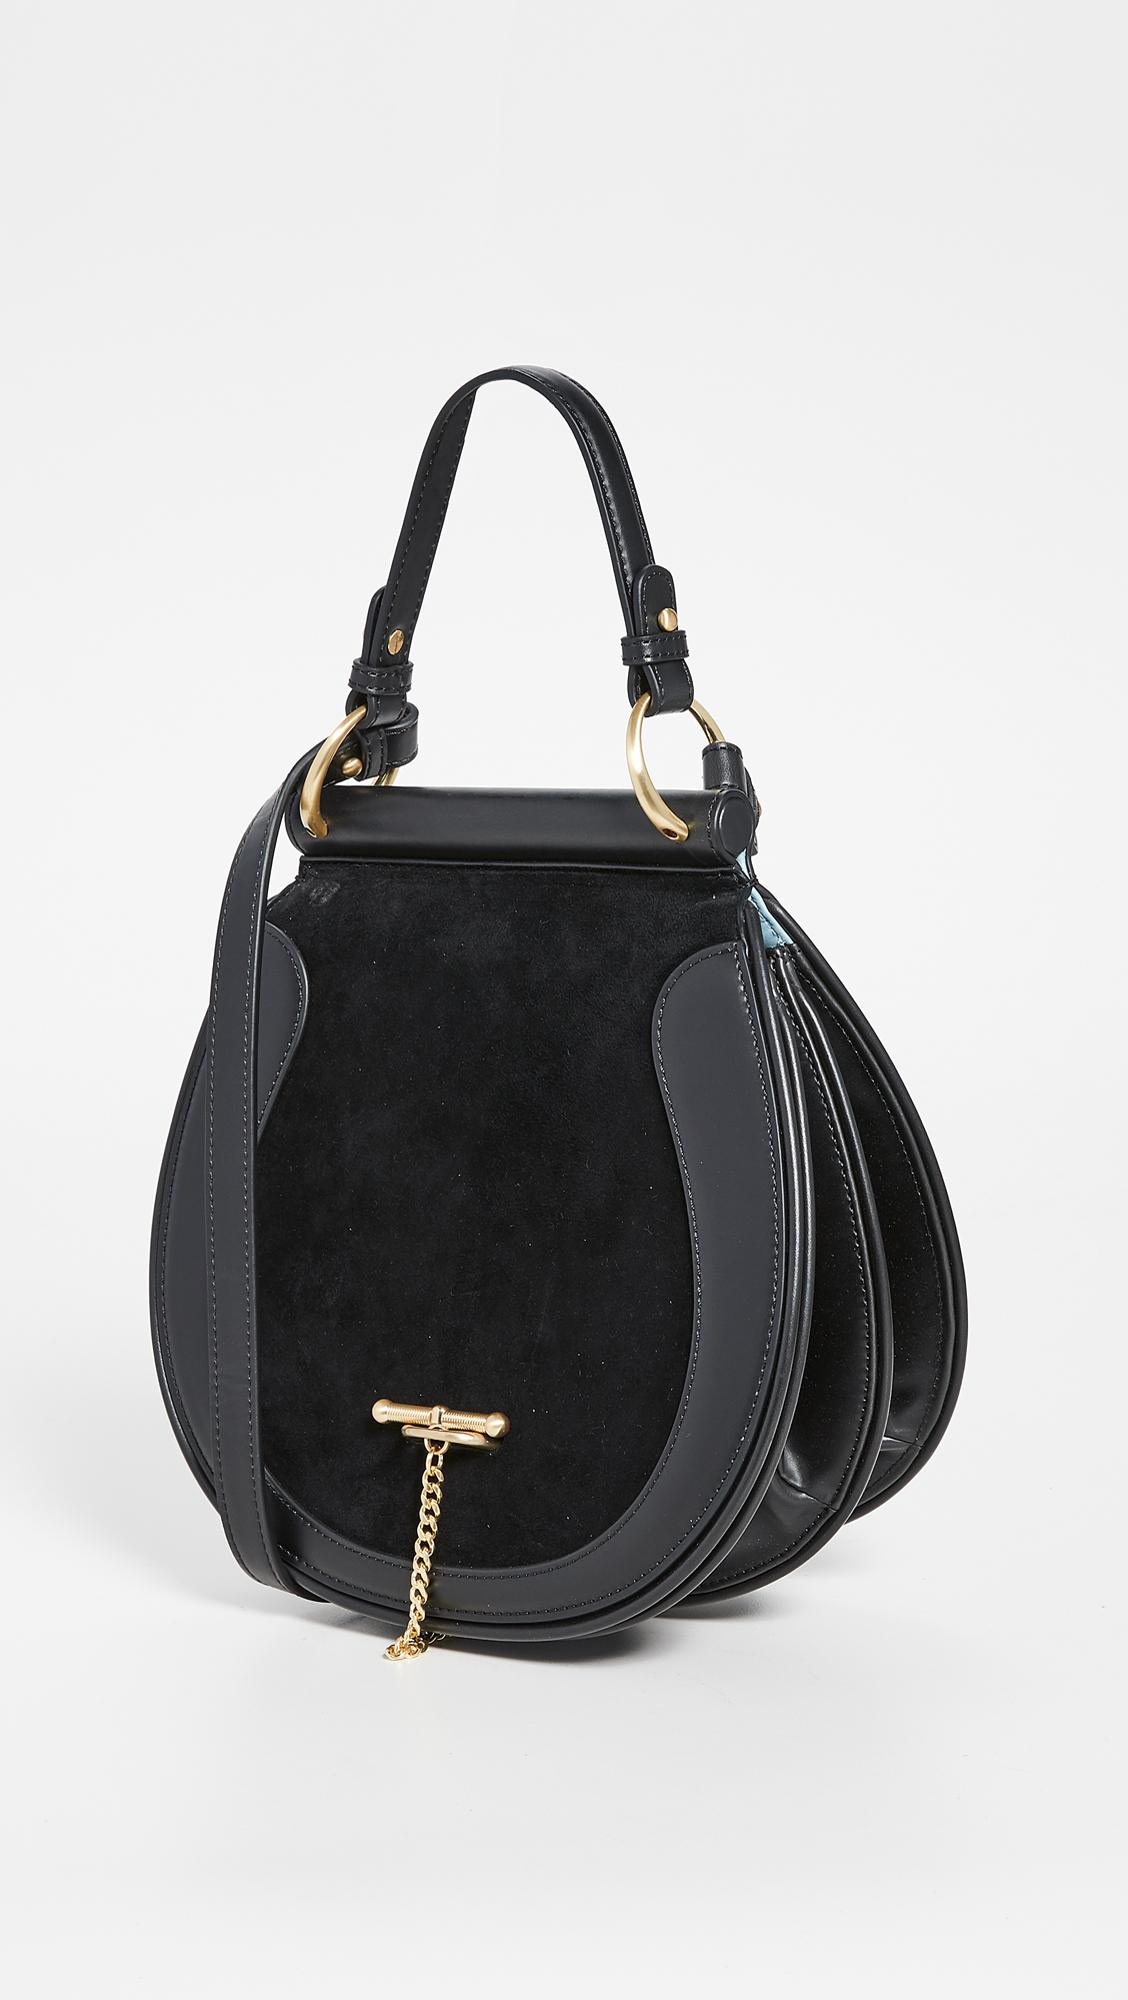 Sancia Leather Cesanne Saddle Bag in Black - Save 5% - Lyst